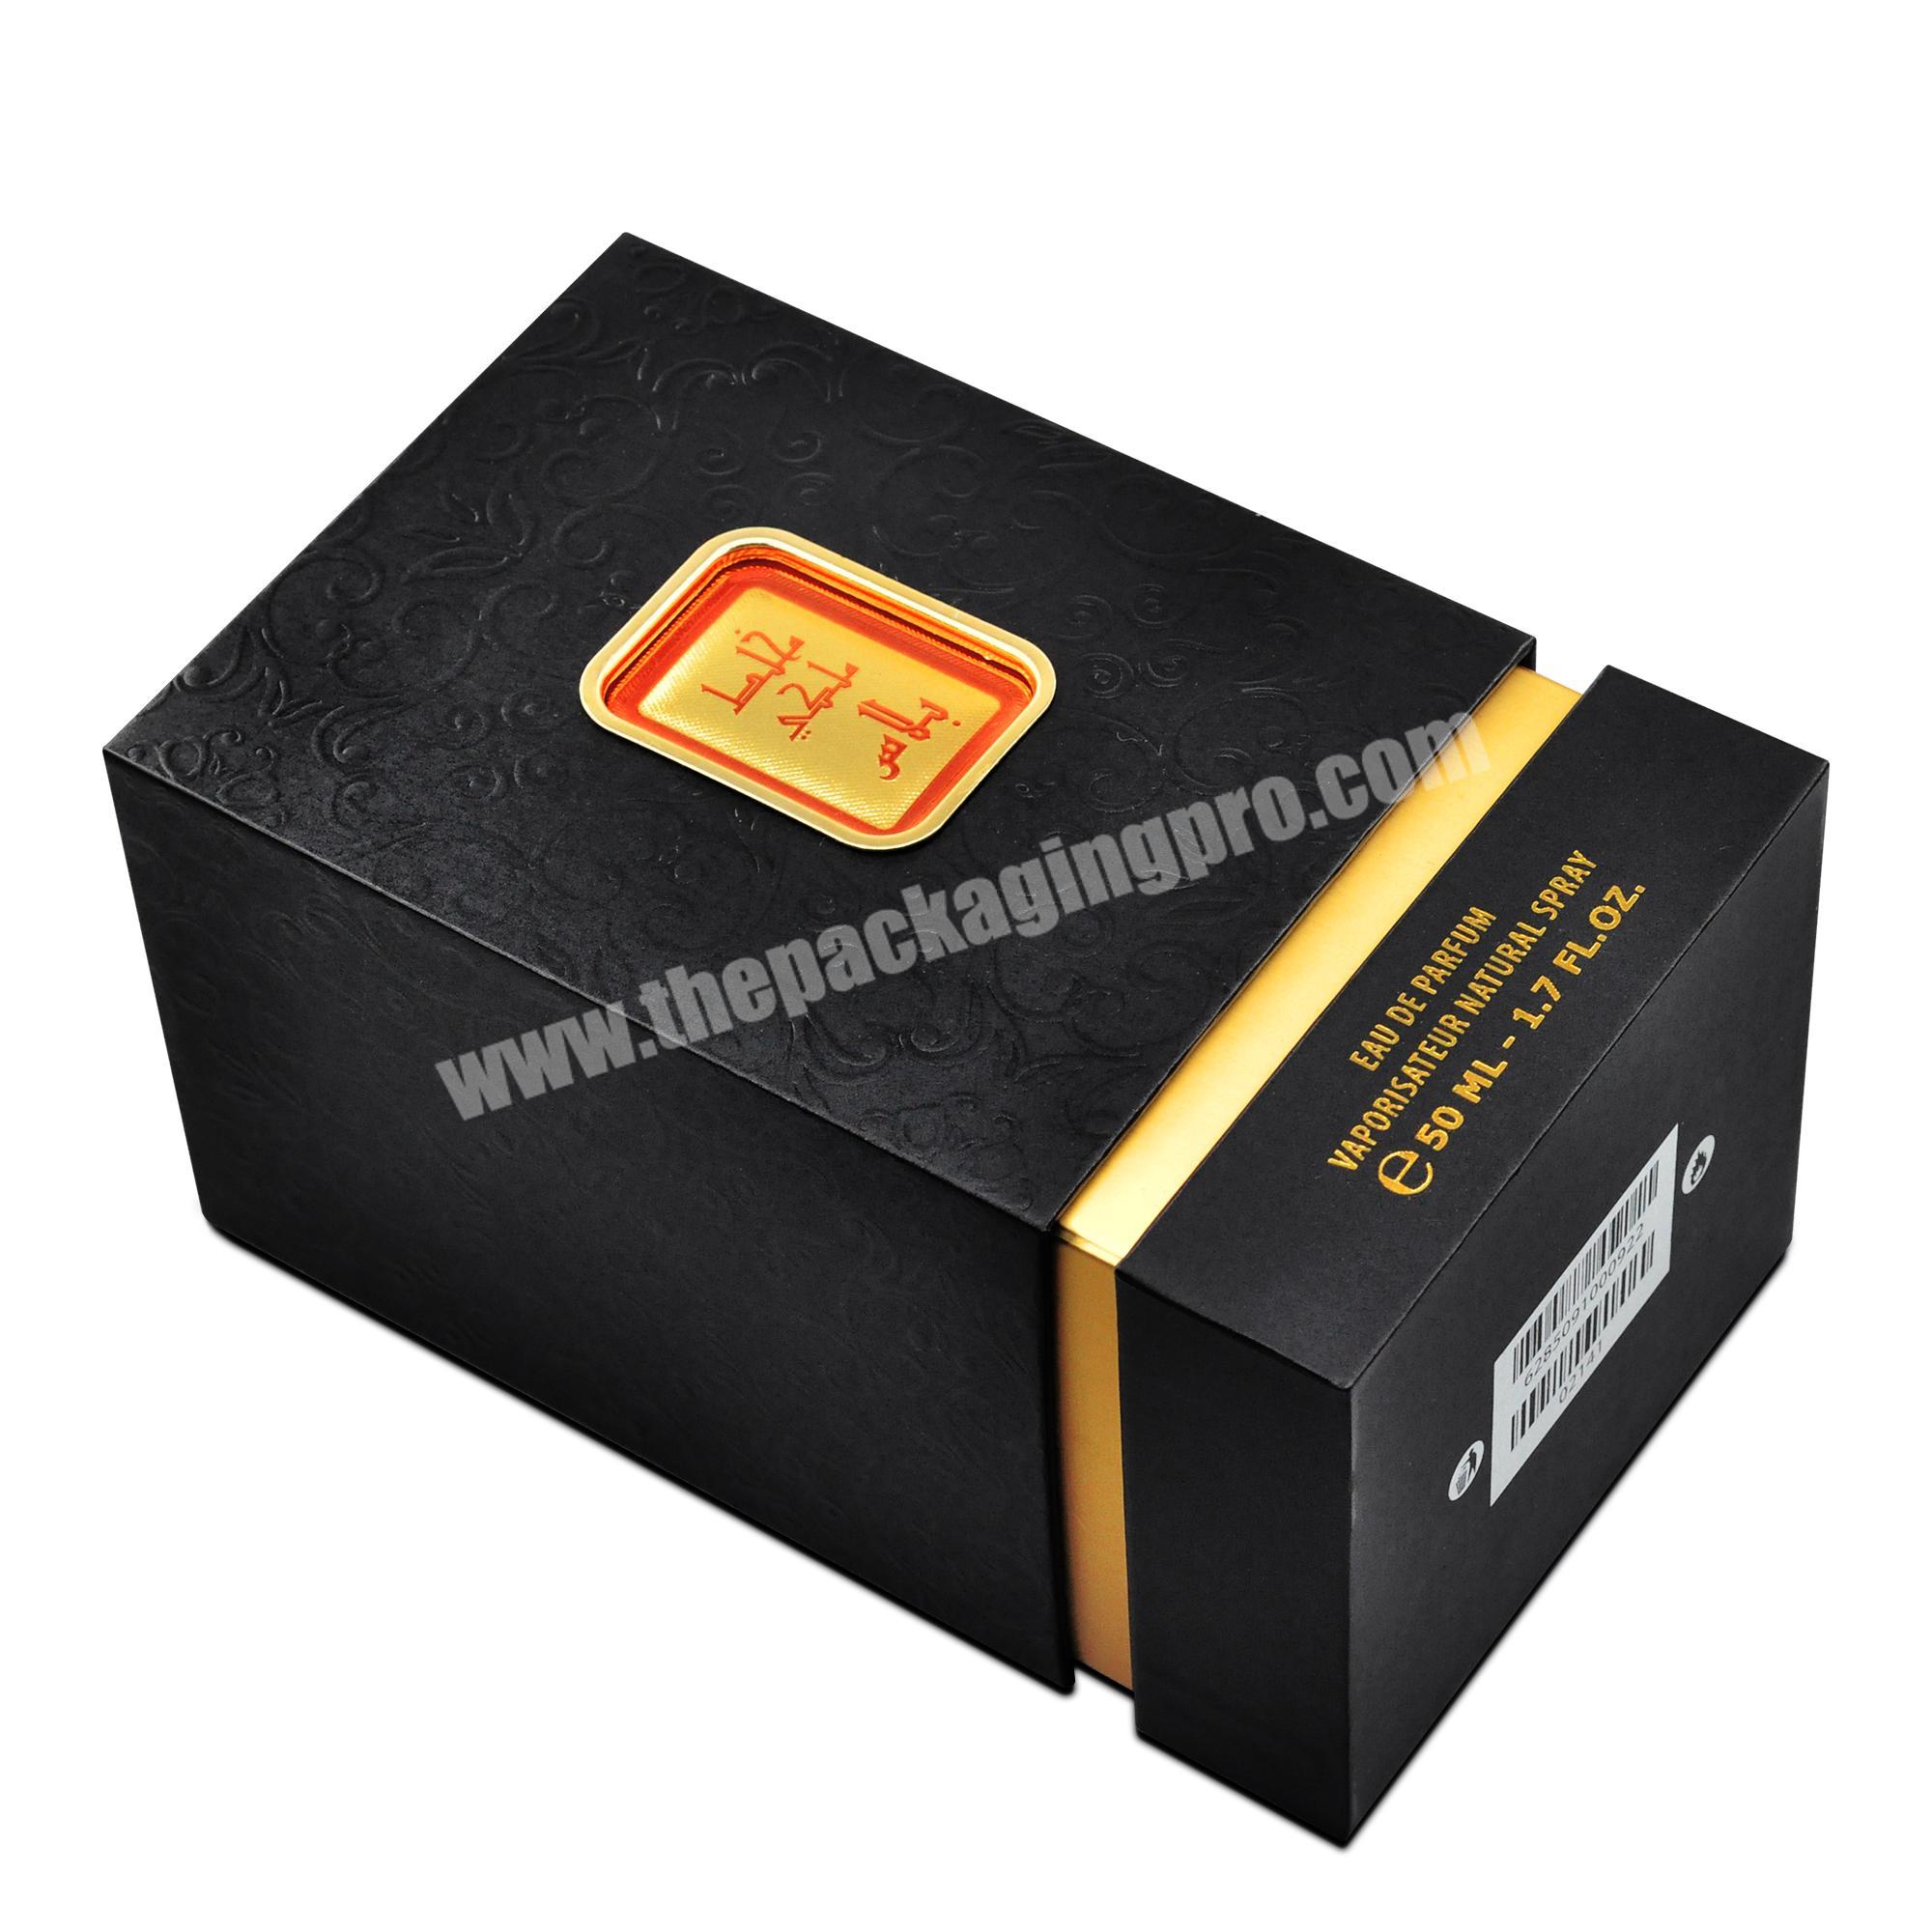 Exquisite workmanship Small glass perfume box custom logo golden and black box